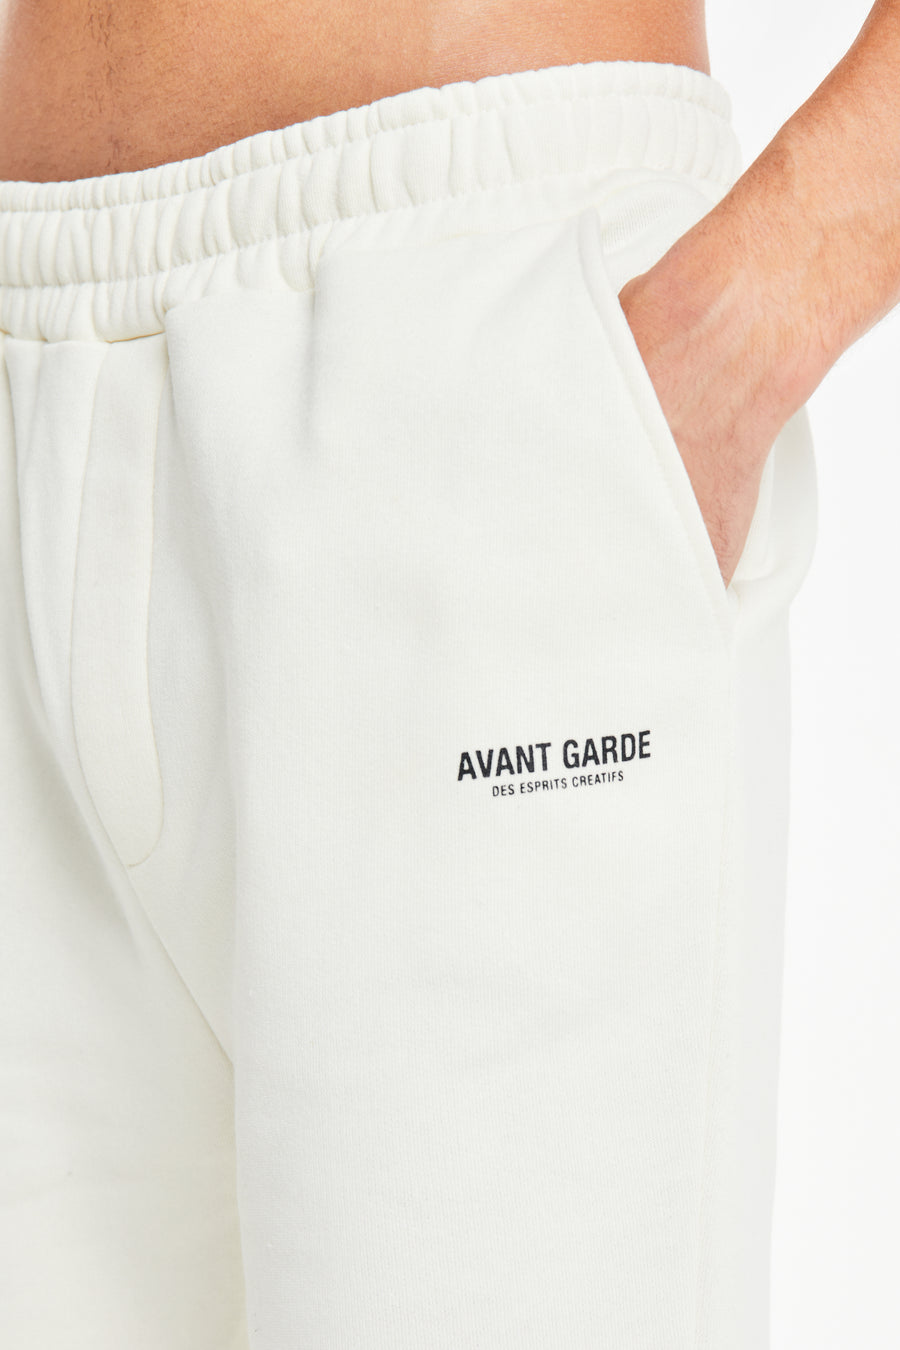 close up of 'Avant Garde Paris' logo on off white jersey shorts